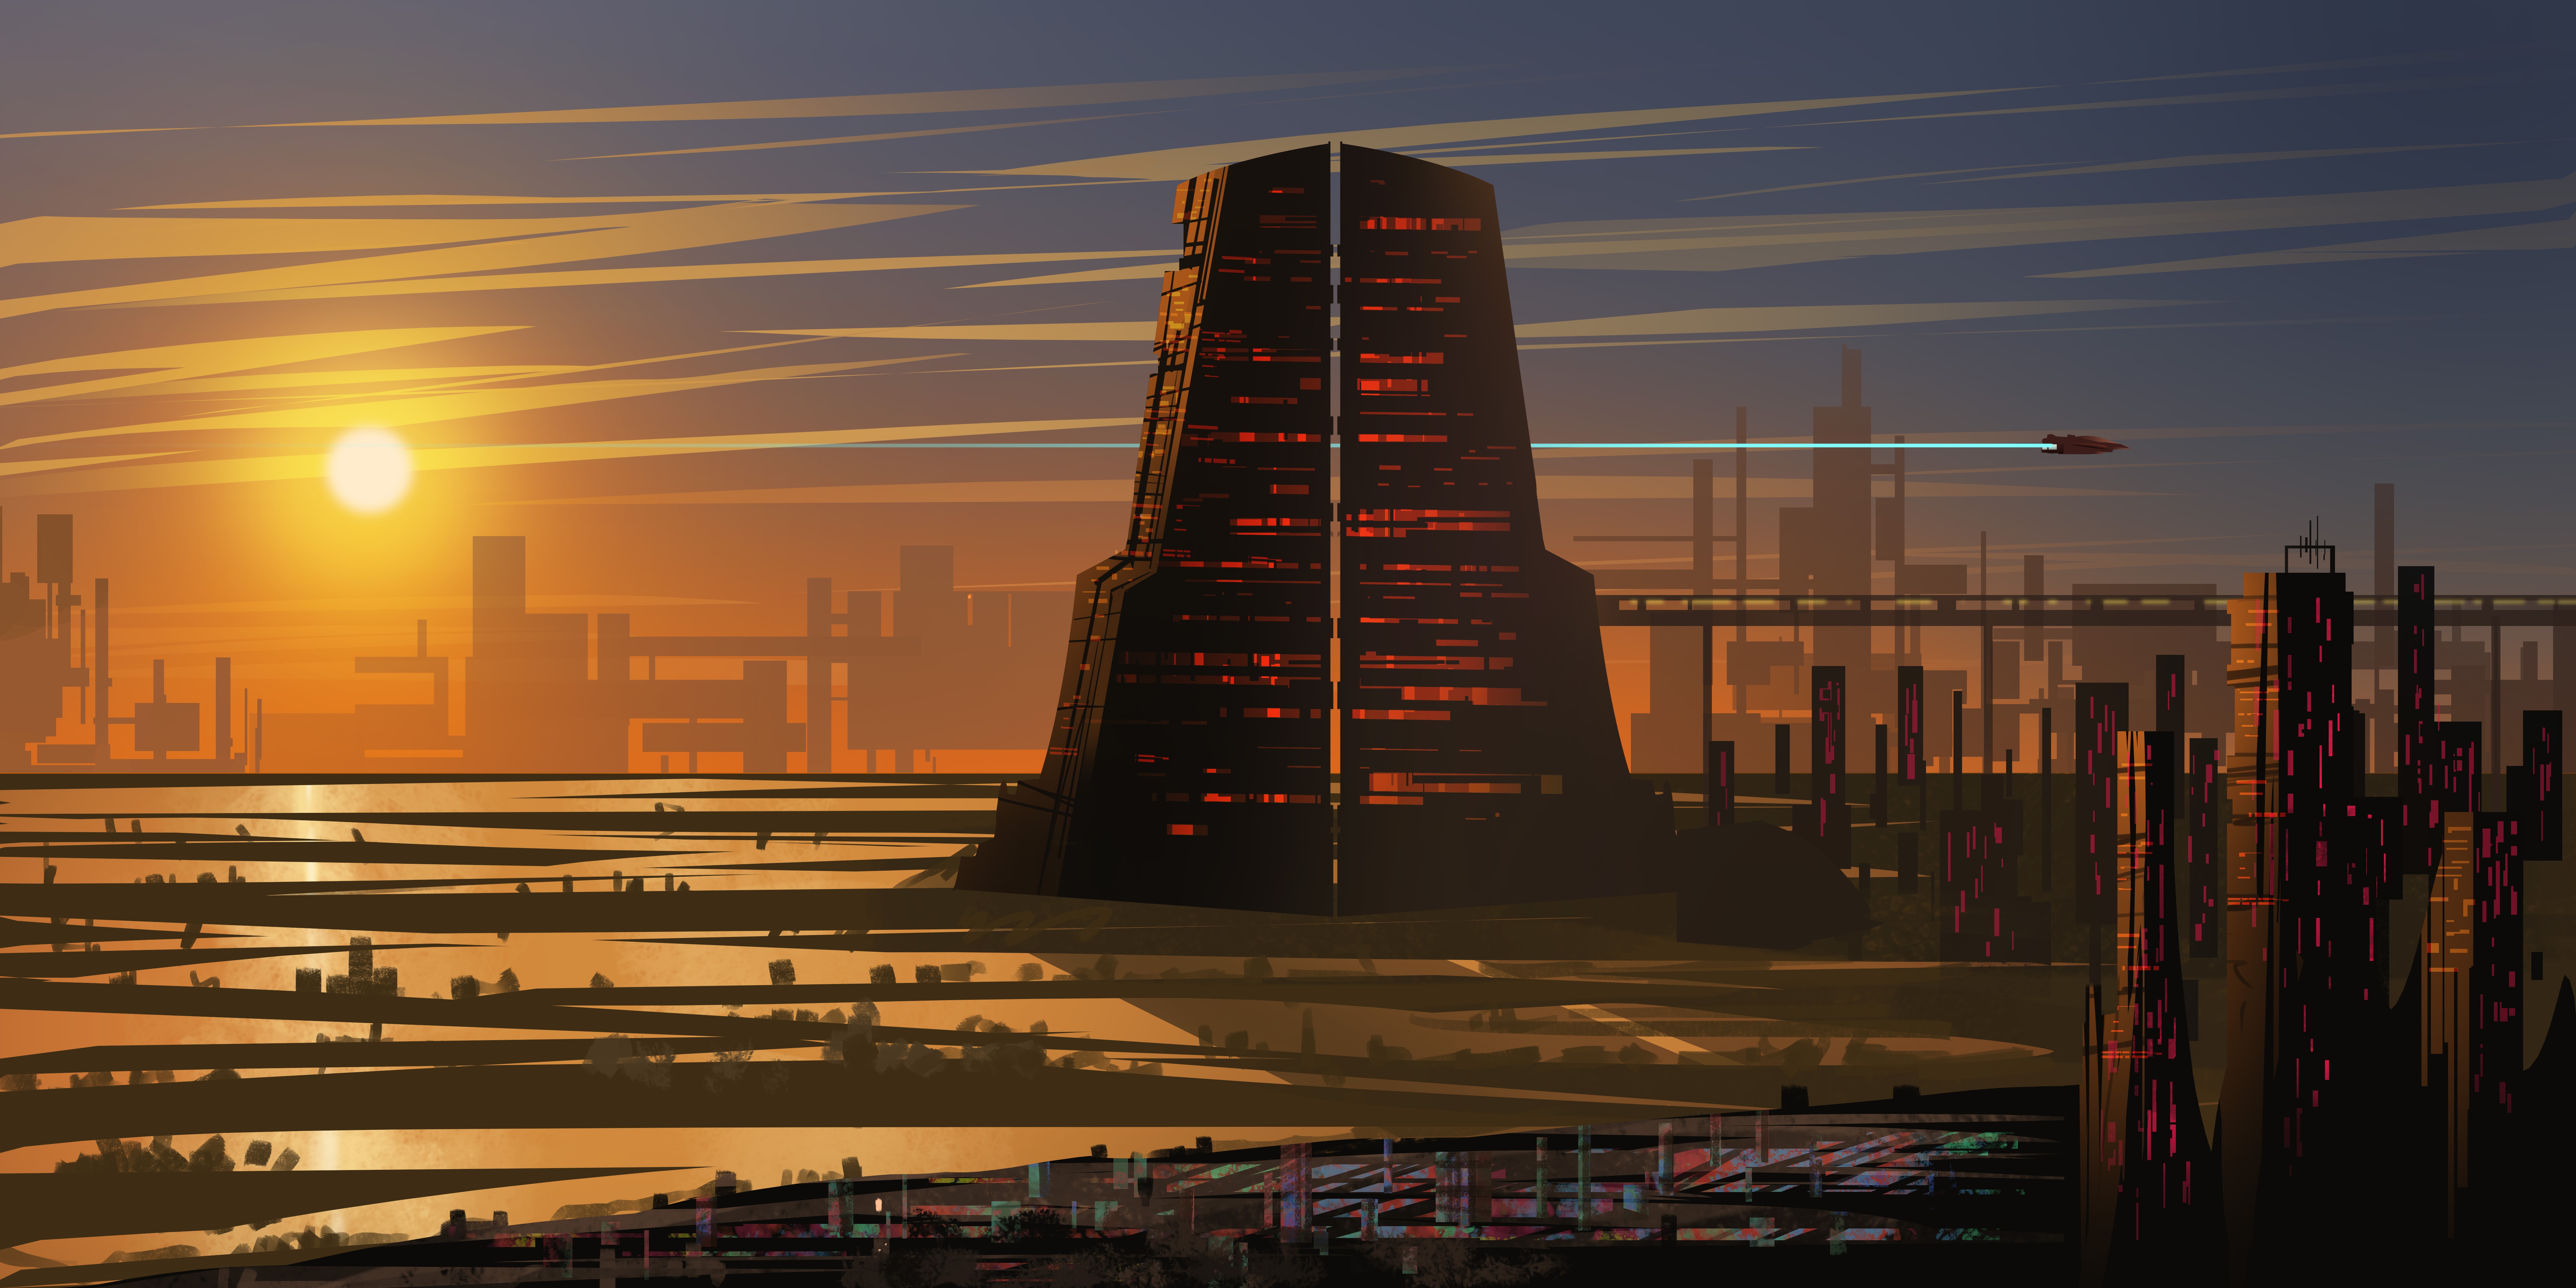 Artwork Digital Art Landscape Sunset Sky Science Fiction Futuristic Skyscraper City Tower Spaceship  9000x4500